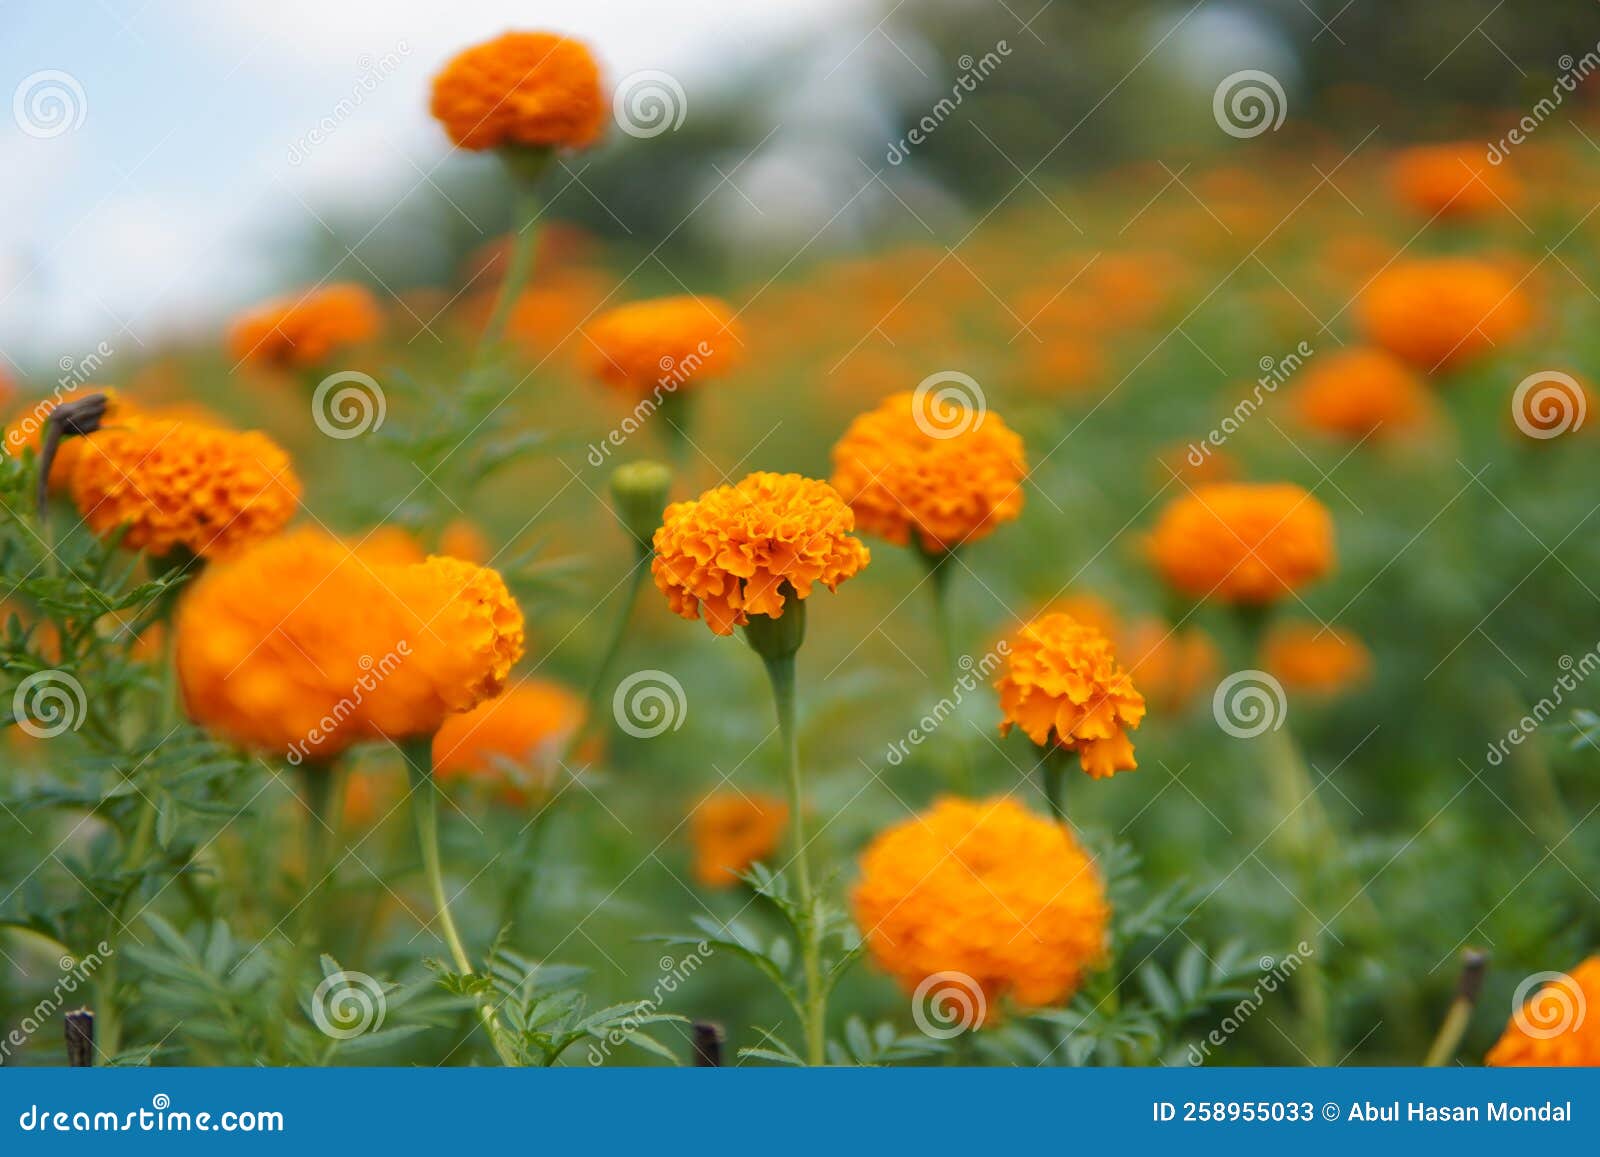 Marigold Flowers, Grange Marigold Flowers Farming. Stock Image - Image ...